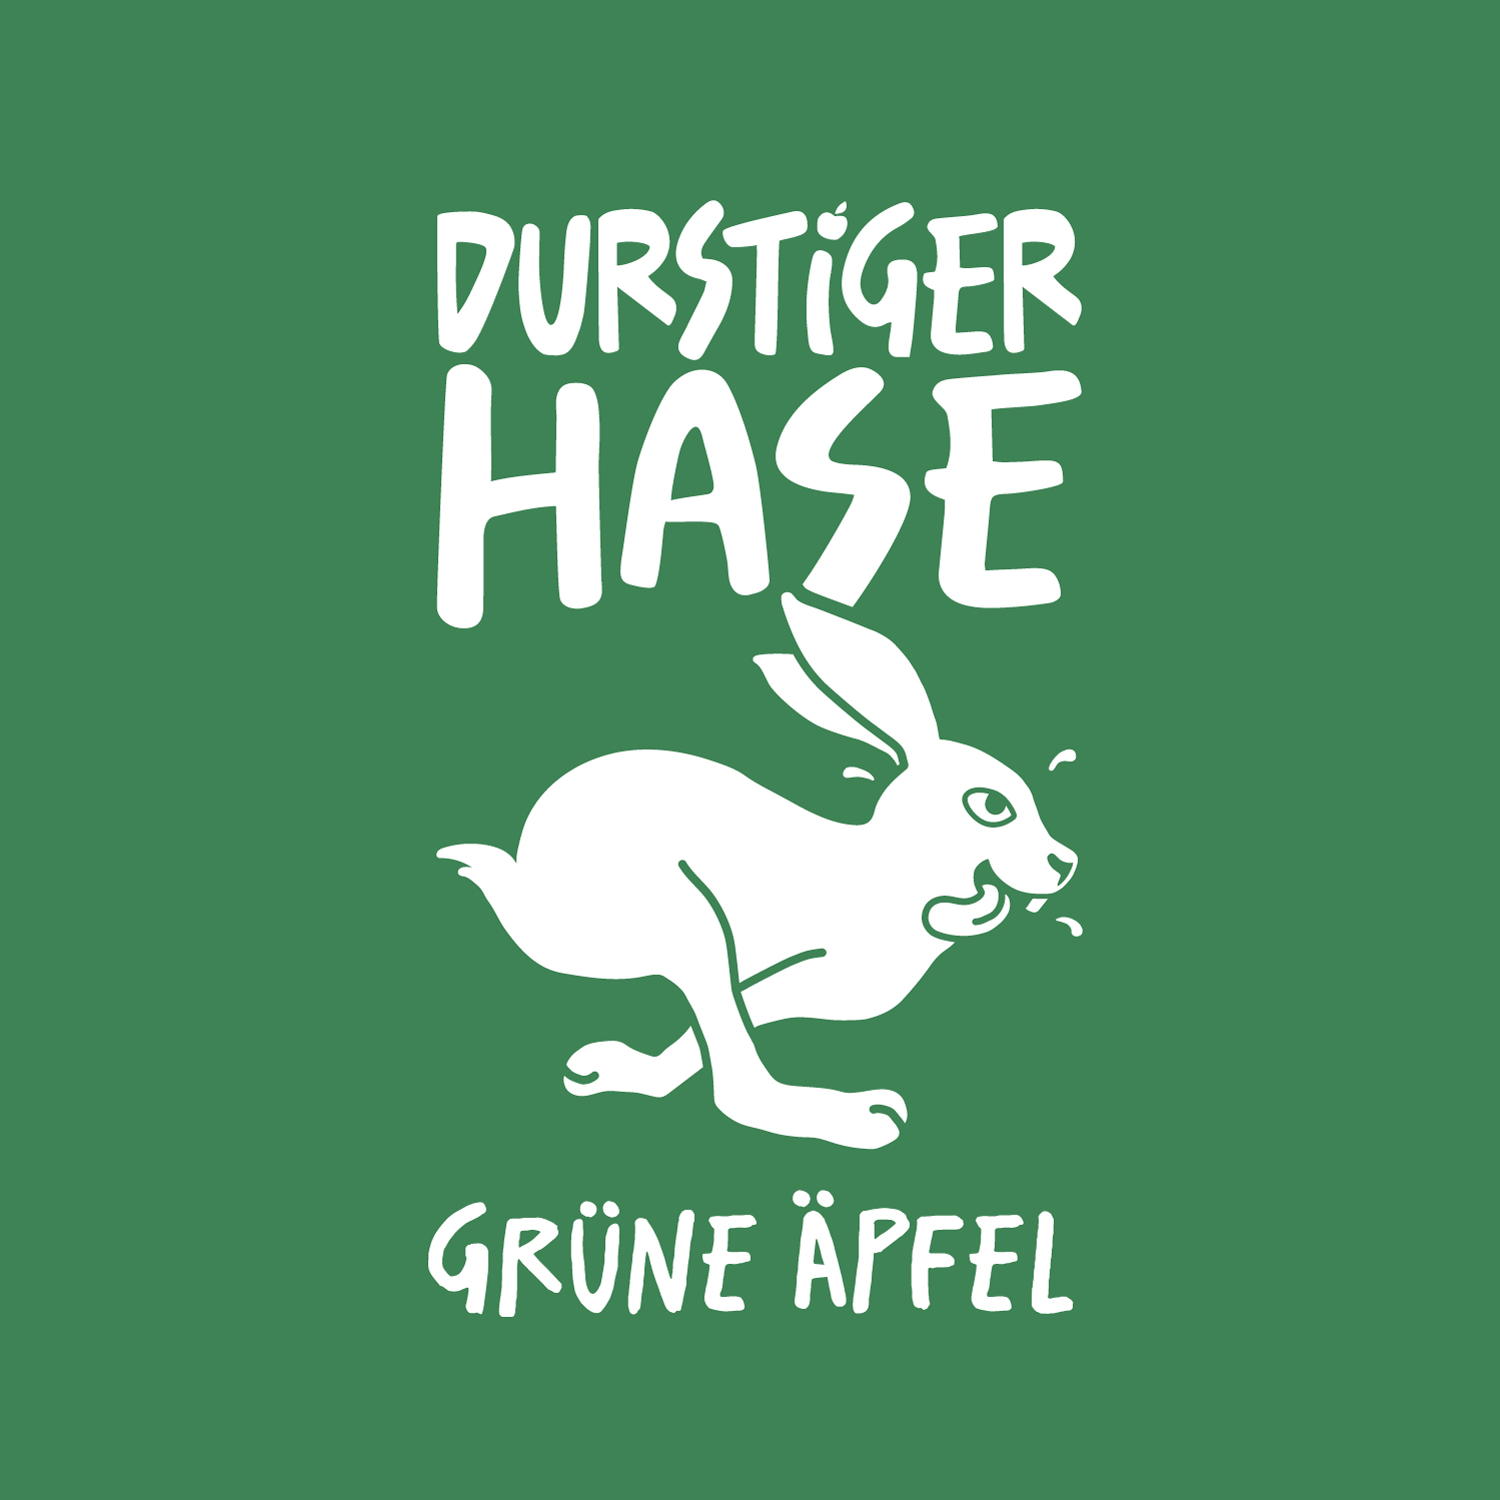 Durstiger-Hase-gruene-aepfel-GPU-Design